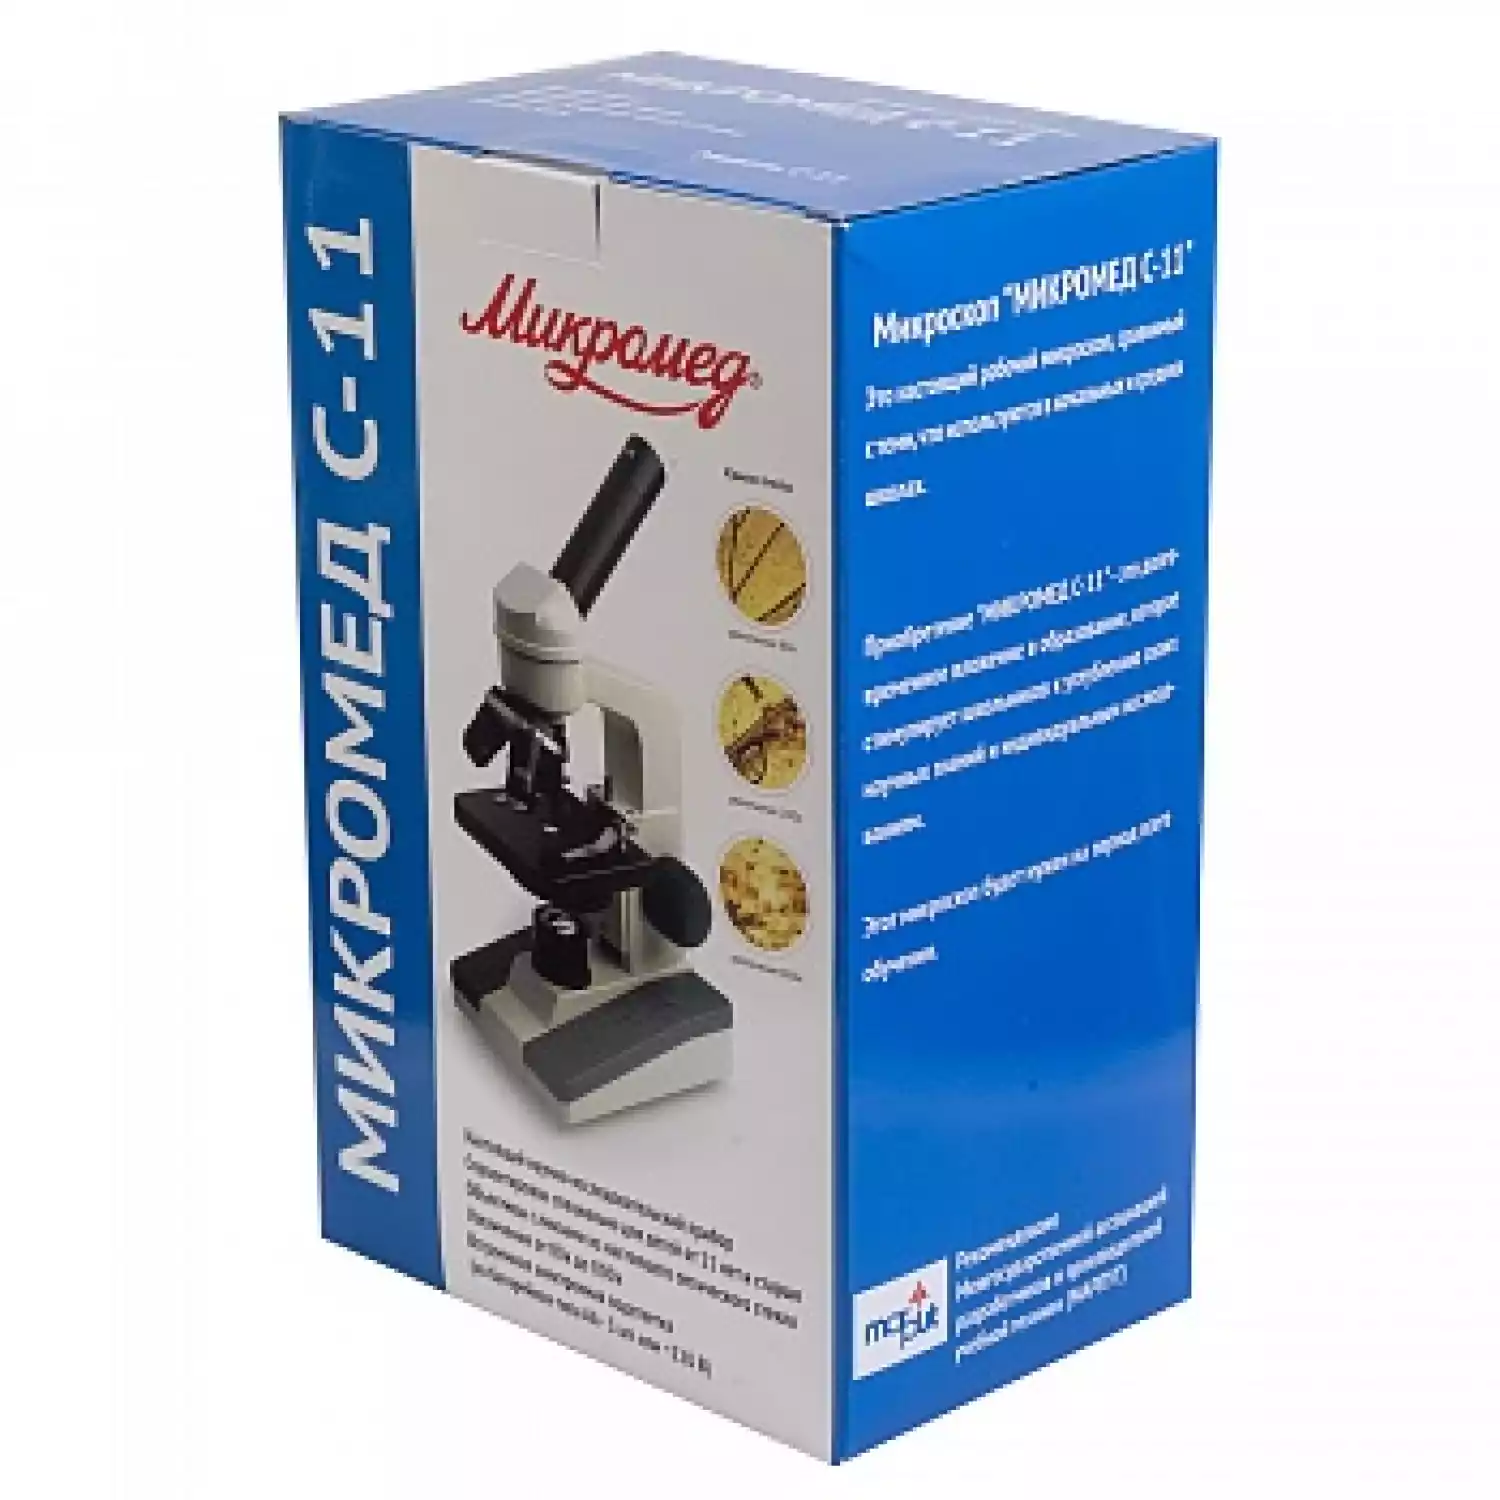 Микроскоп Микромед С-11 - 4